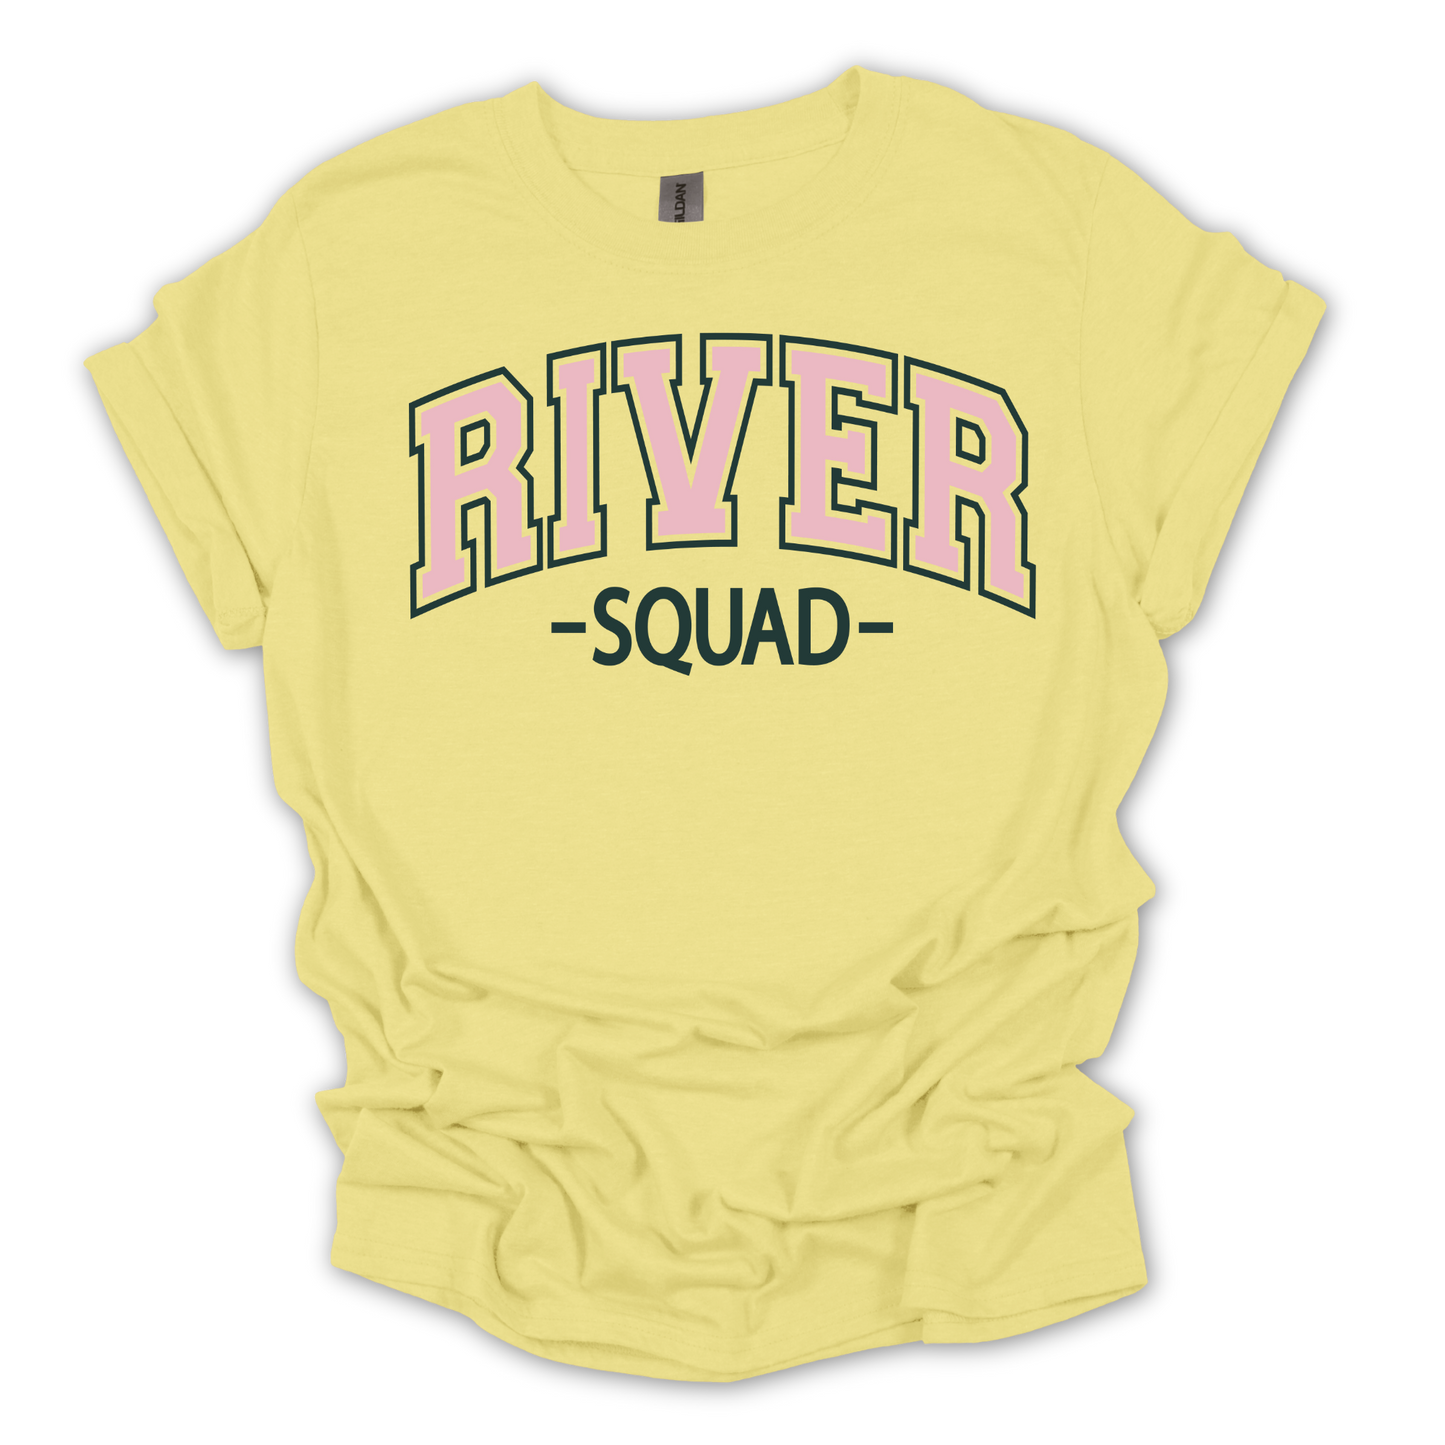 River Squad Tee